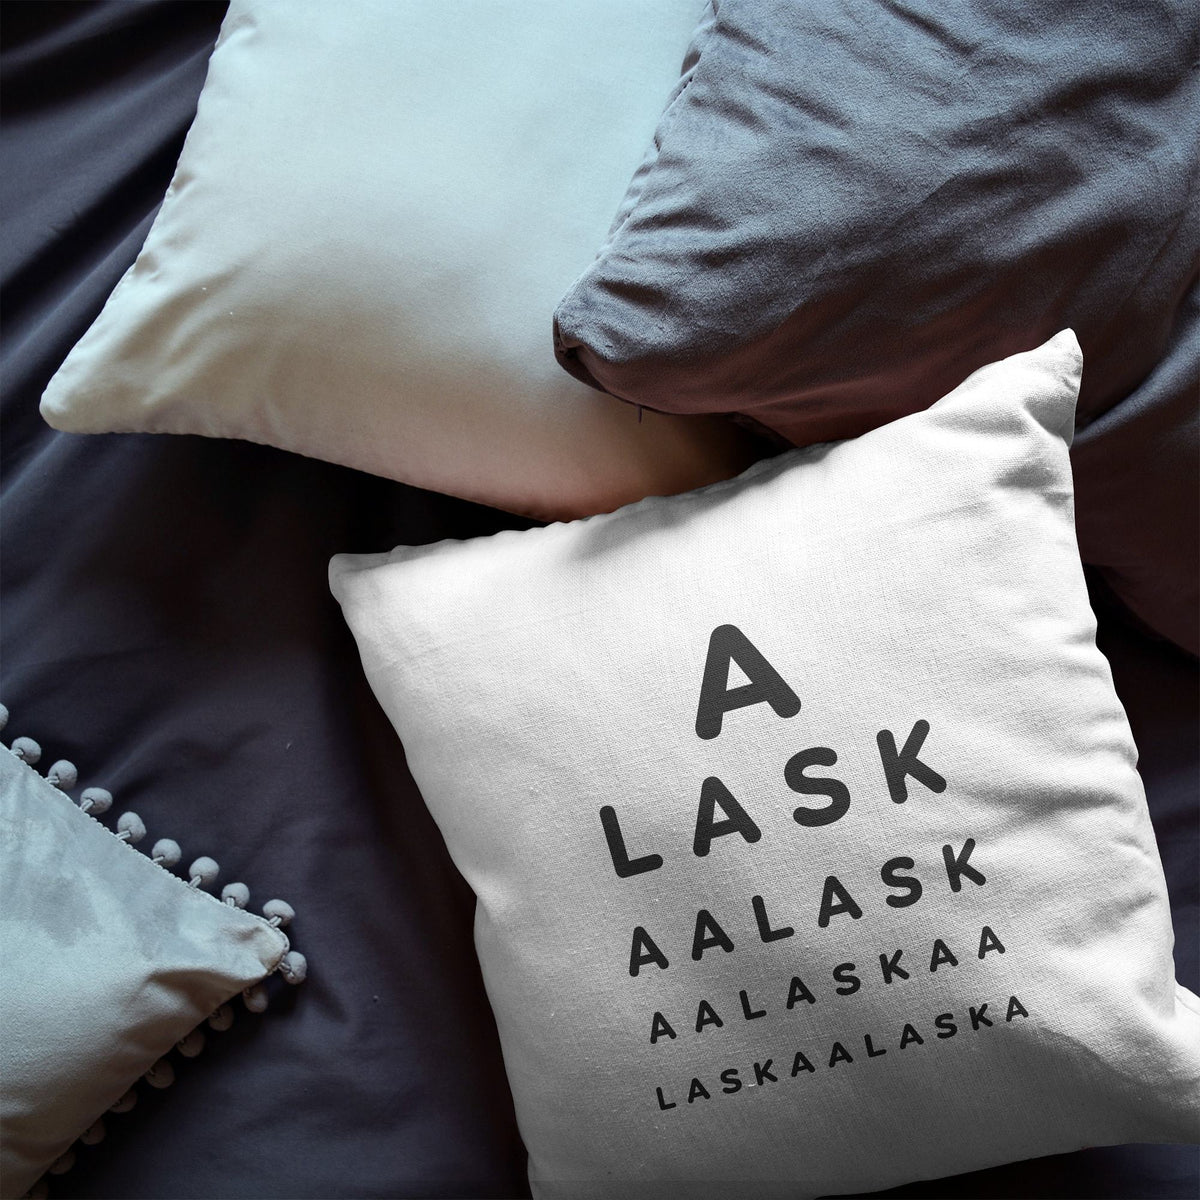 Alaska &quot;Eye Exam&quot; Velveteen Throw Pillow - Point Two Design